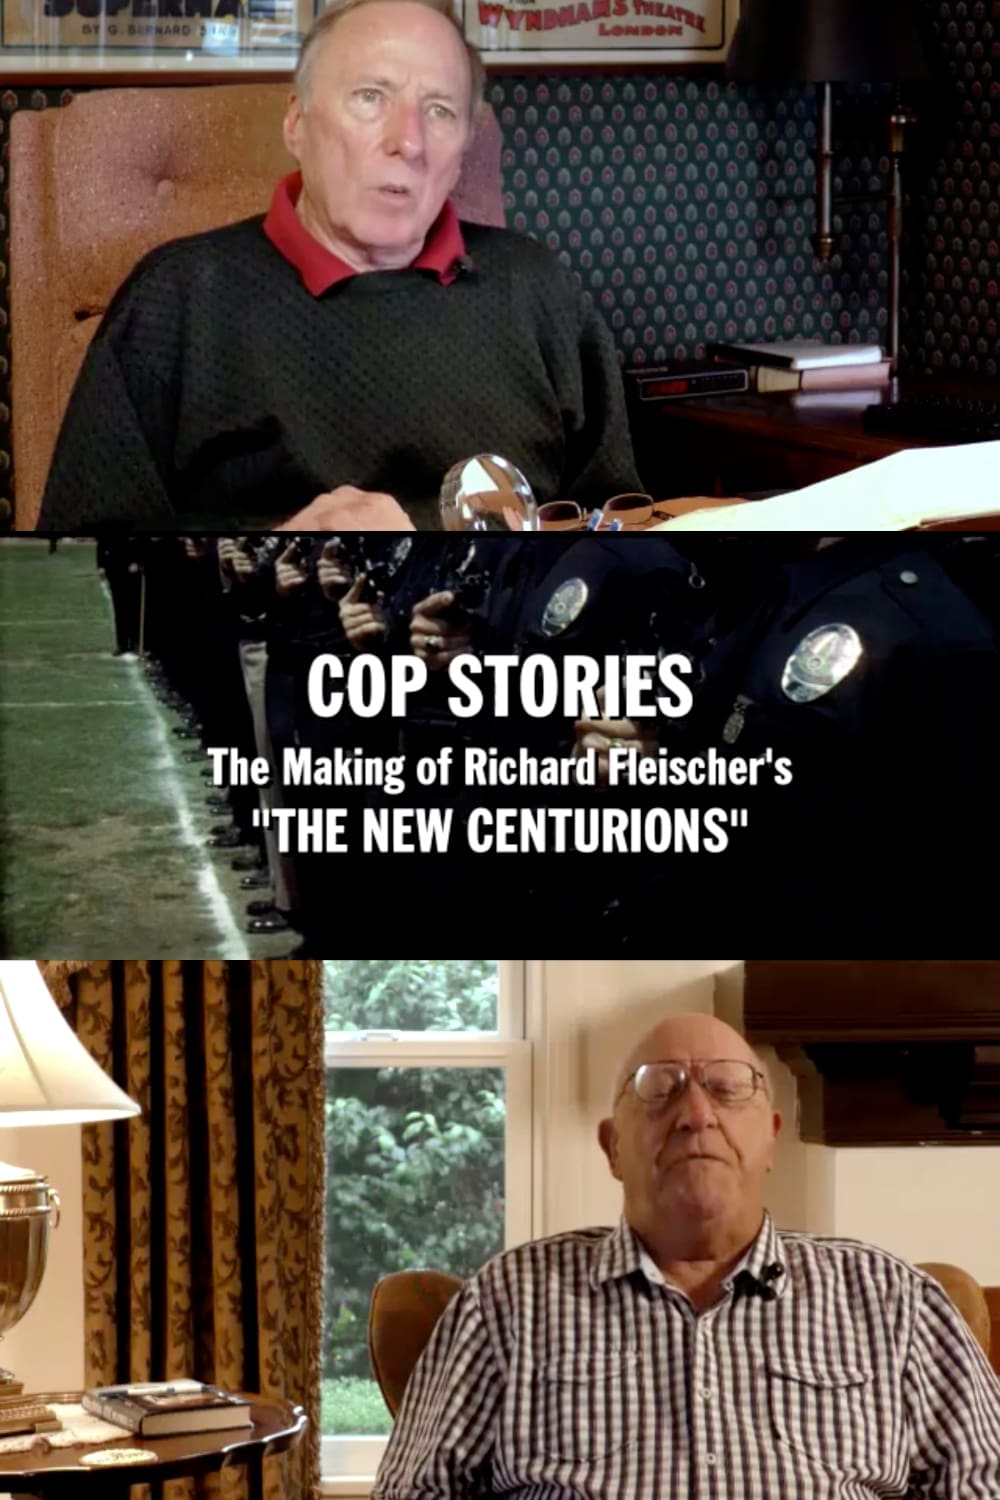 Cop Stories: The Making of Richard Fleischer’s ‘The New Centurions’